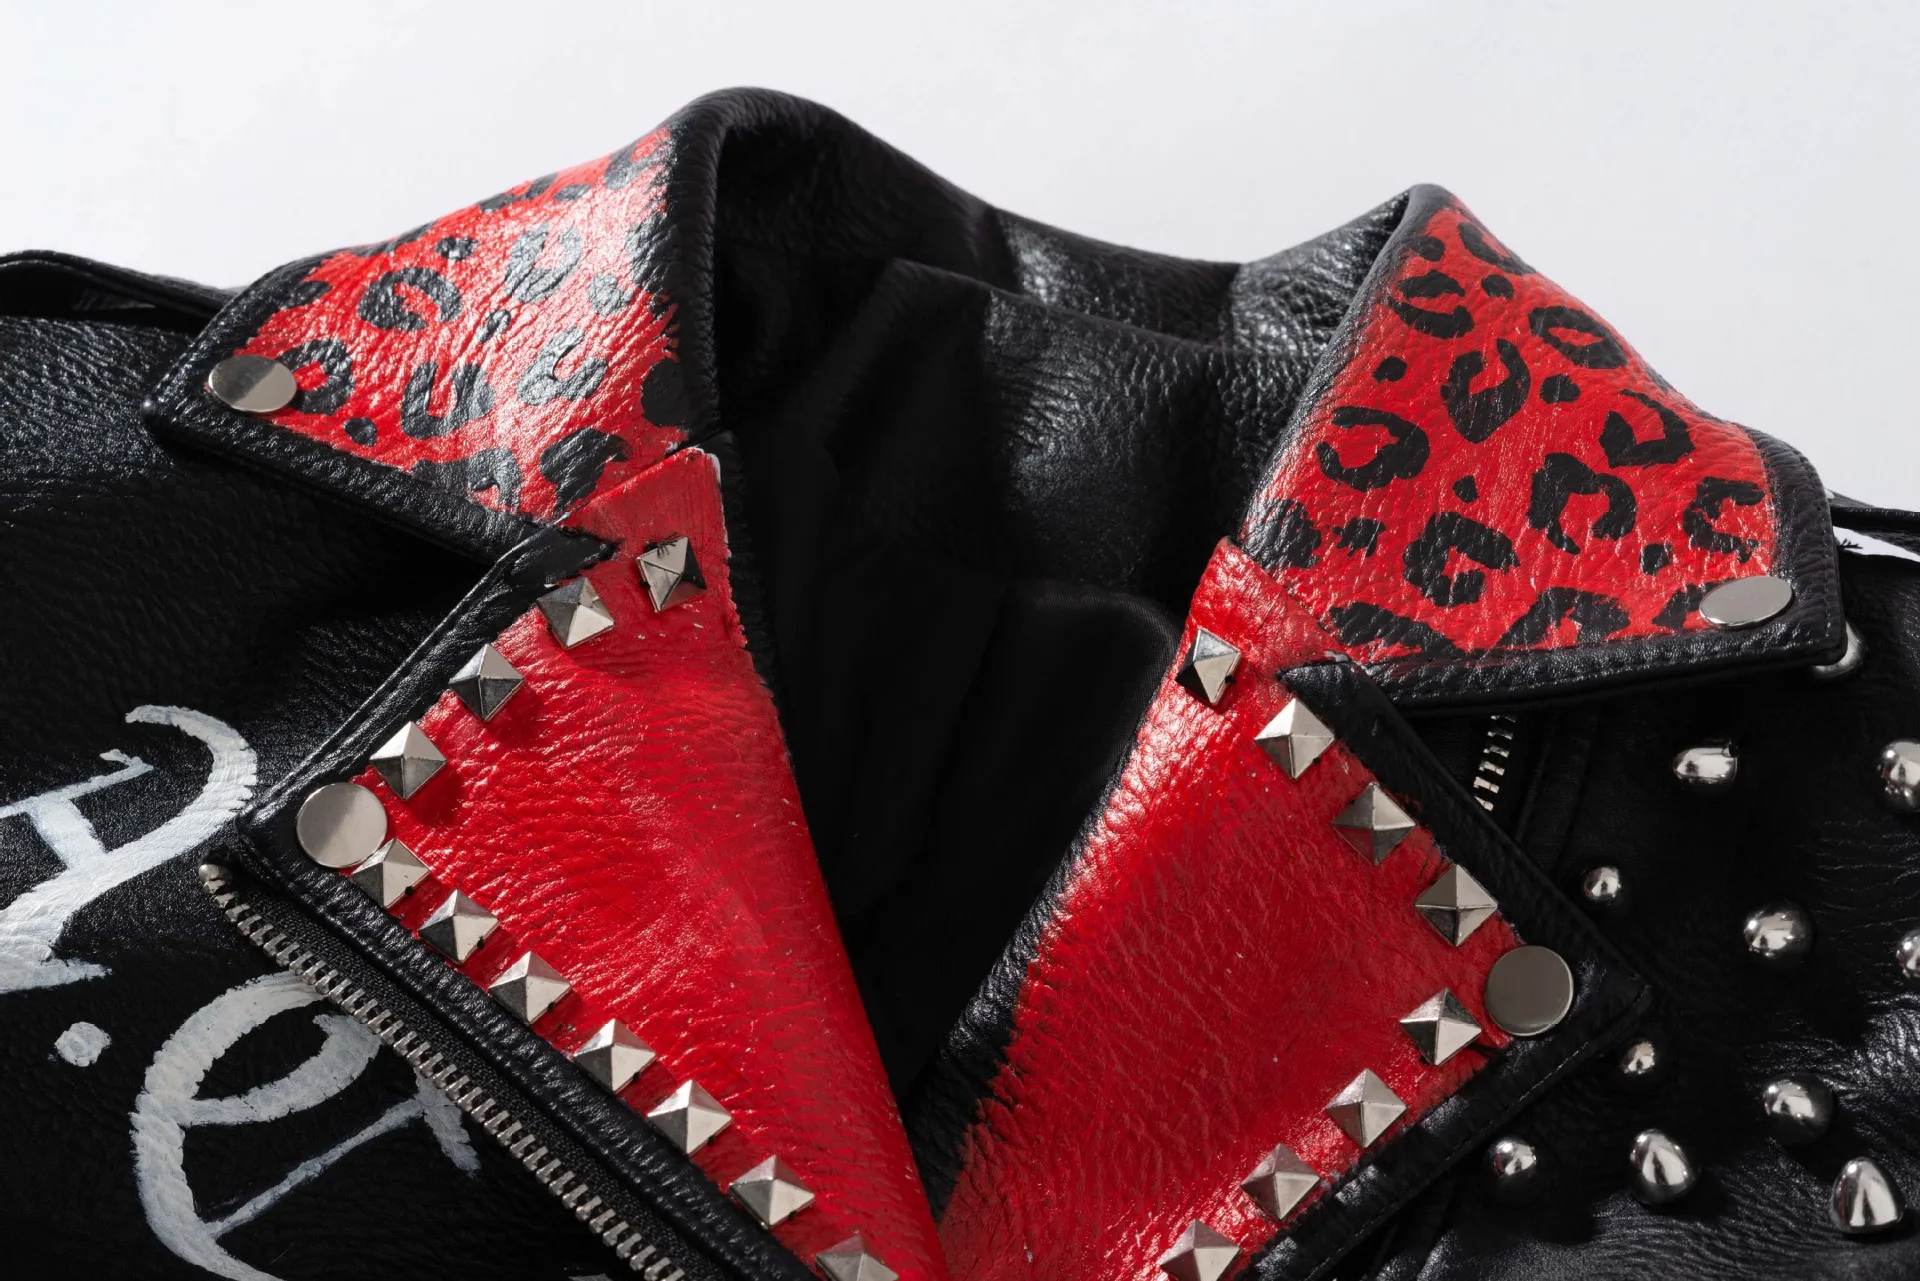 Women's Spring New Leather Jacket Street Skull Fun Print Rivet Colorblock Punk Motorcycle Leather Jacket enlarge